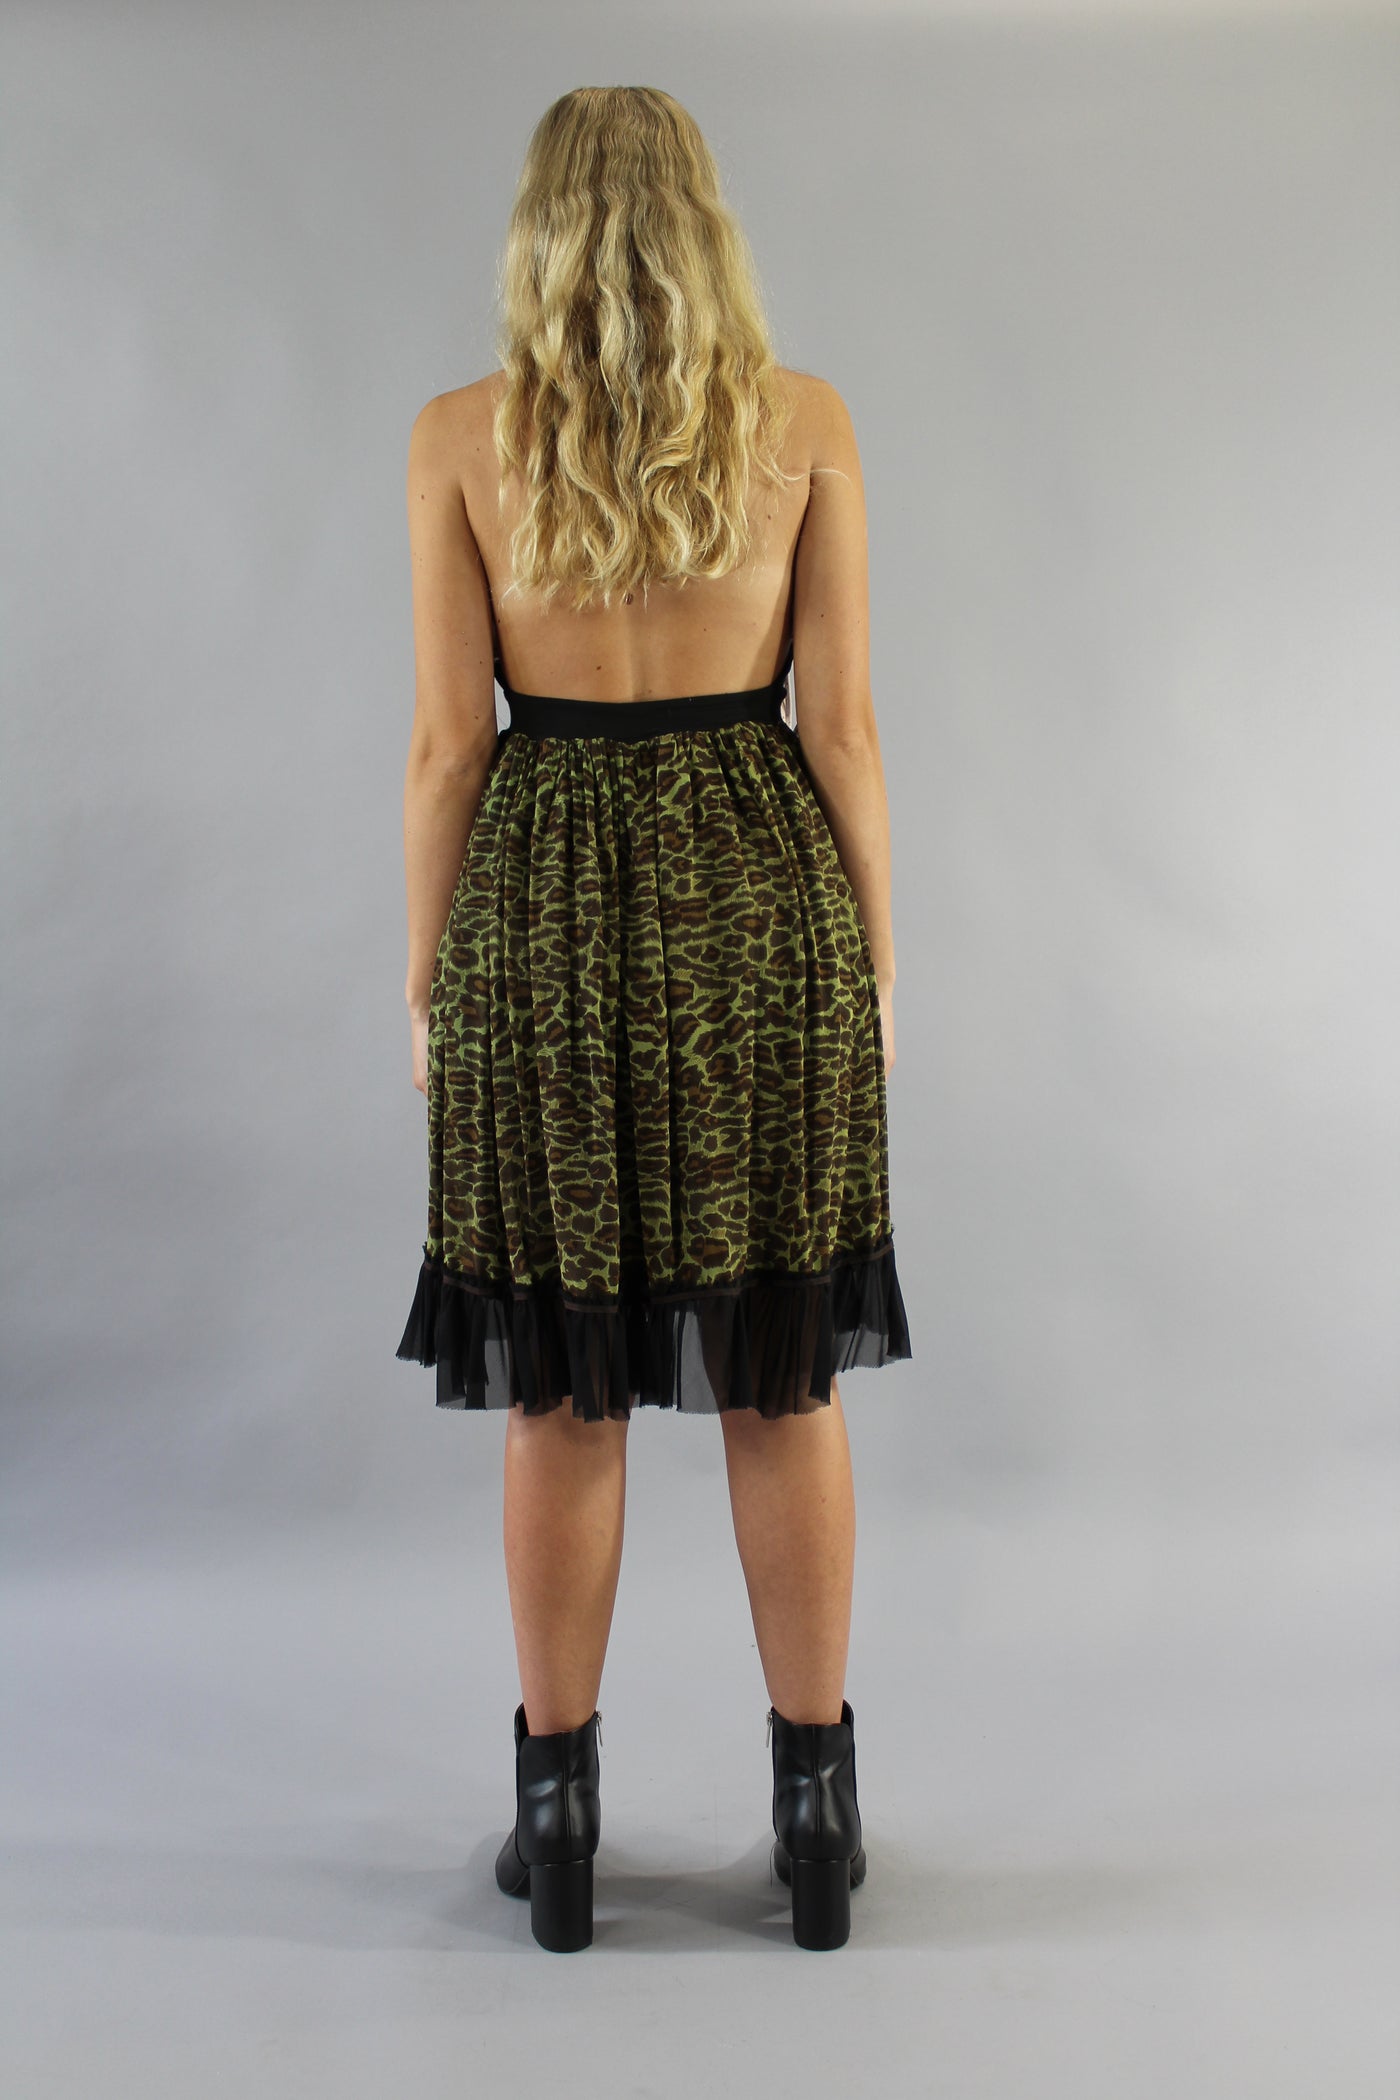 Archive Leopard Halter Dress